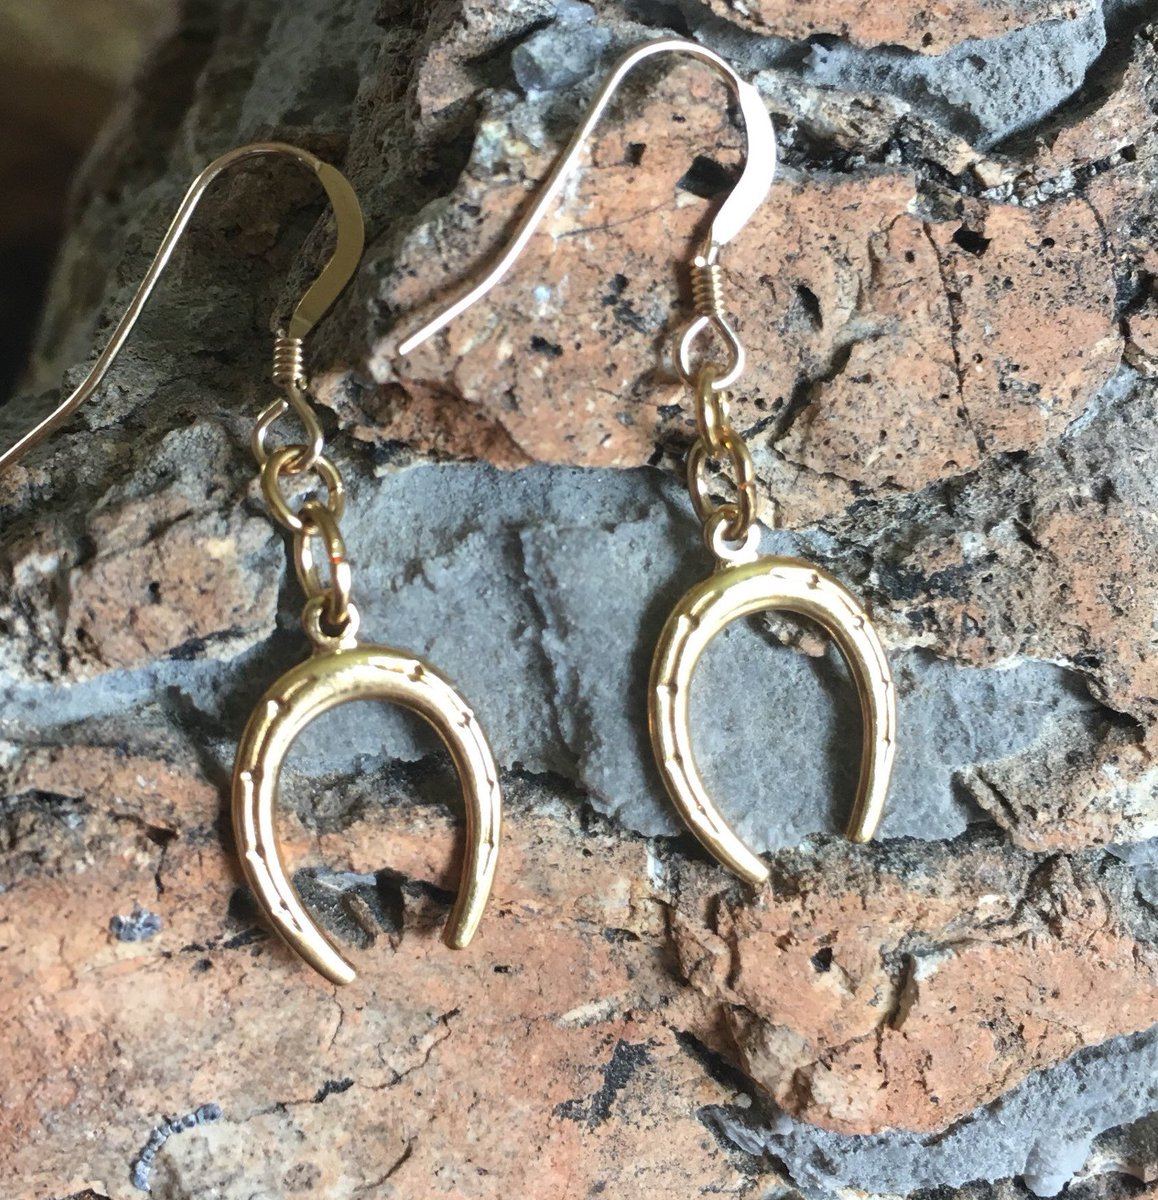 Gold plated horseshoe earrings #jewelry #goodluckjewelry #horseshoeearrings etsy.me/2RRoNFm